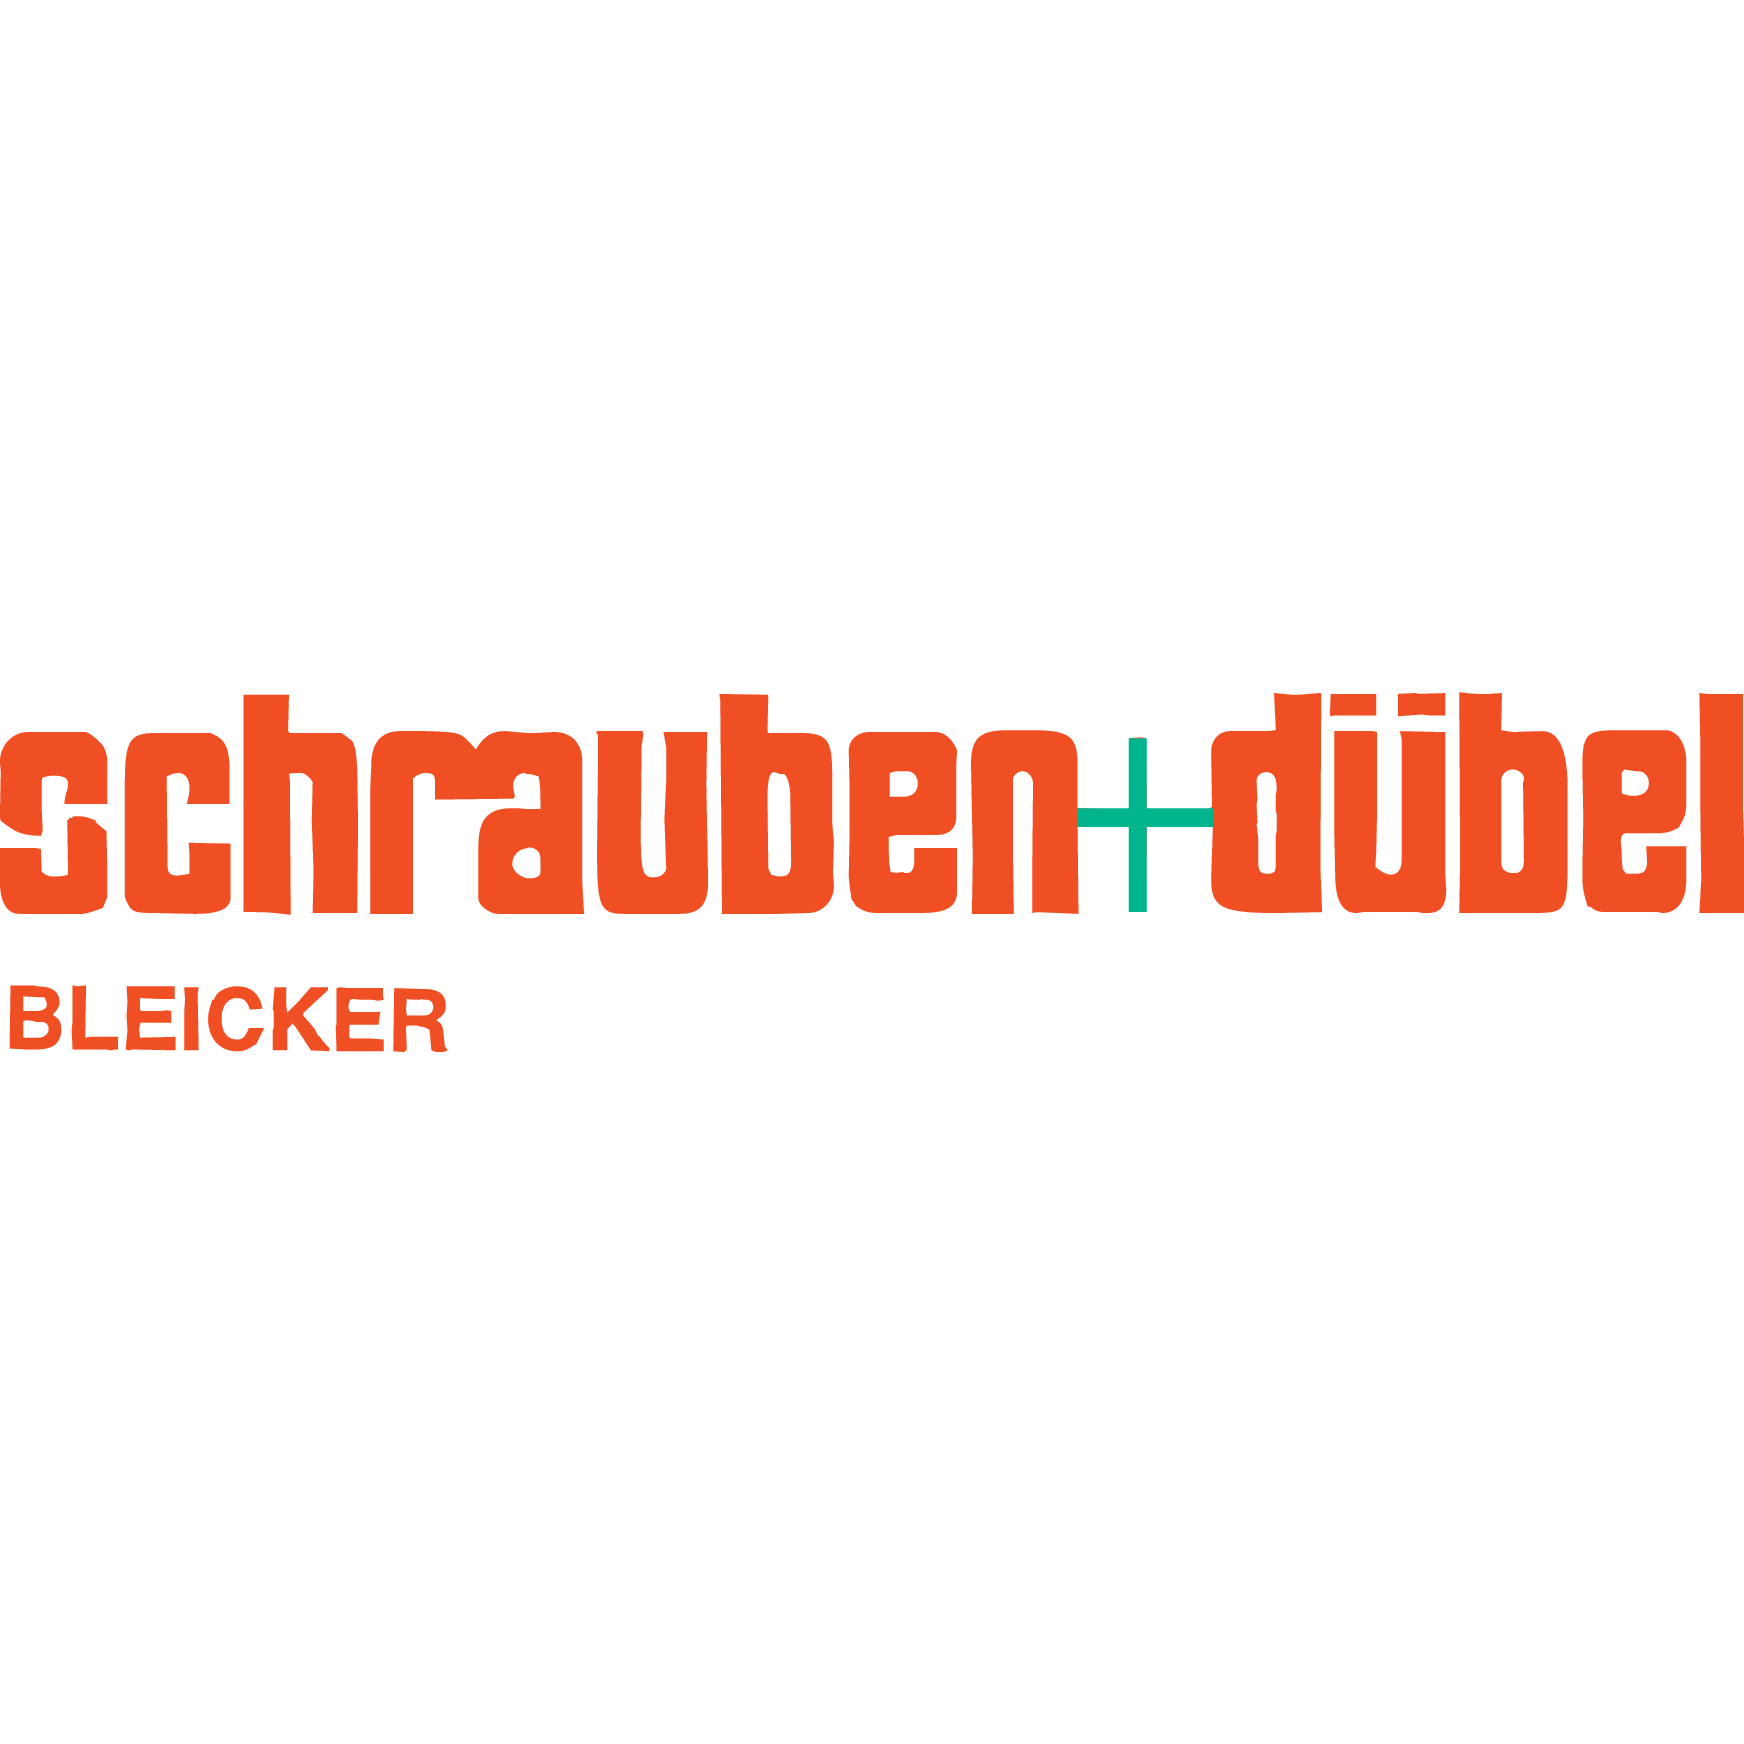 Schrauben + Dübel Handelsgesellschaft mbH Logo